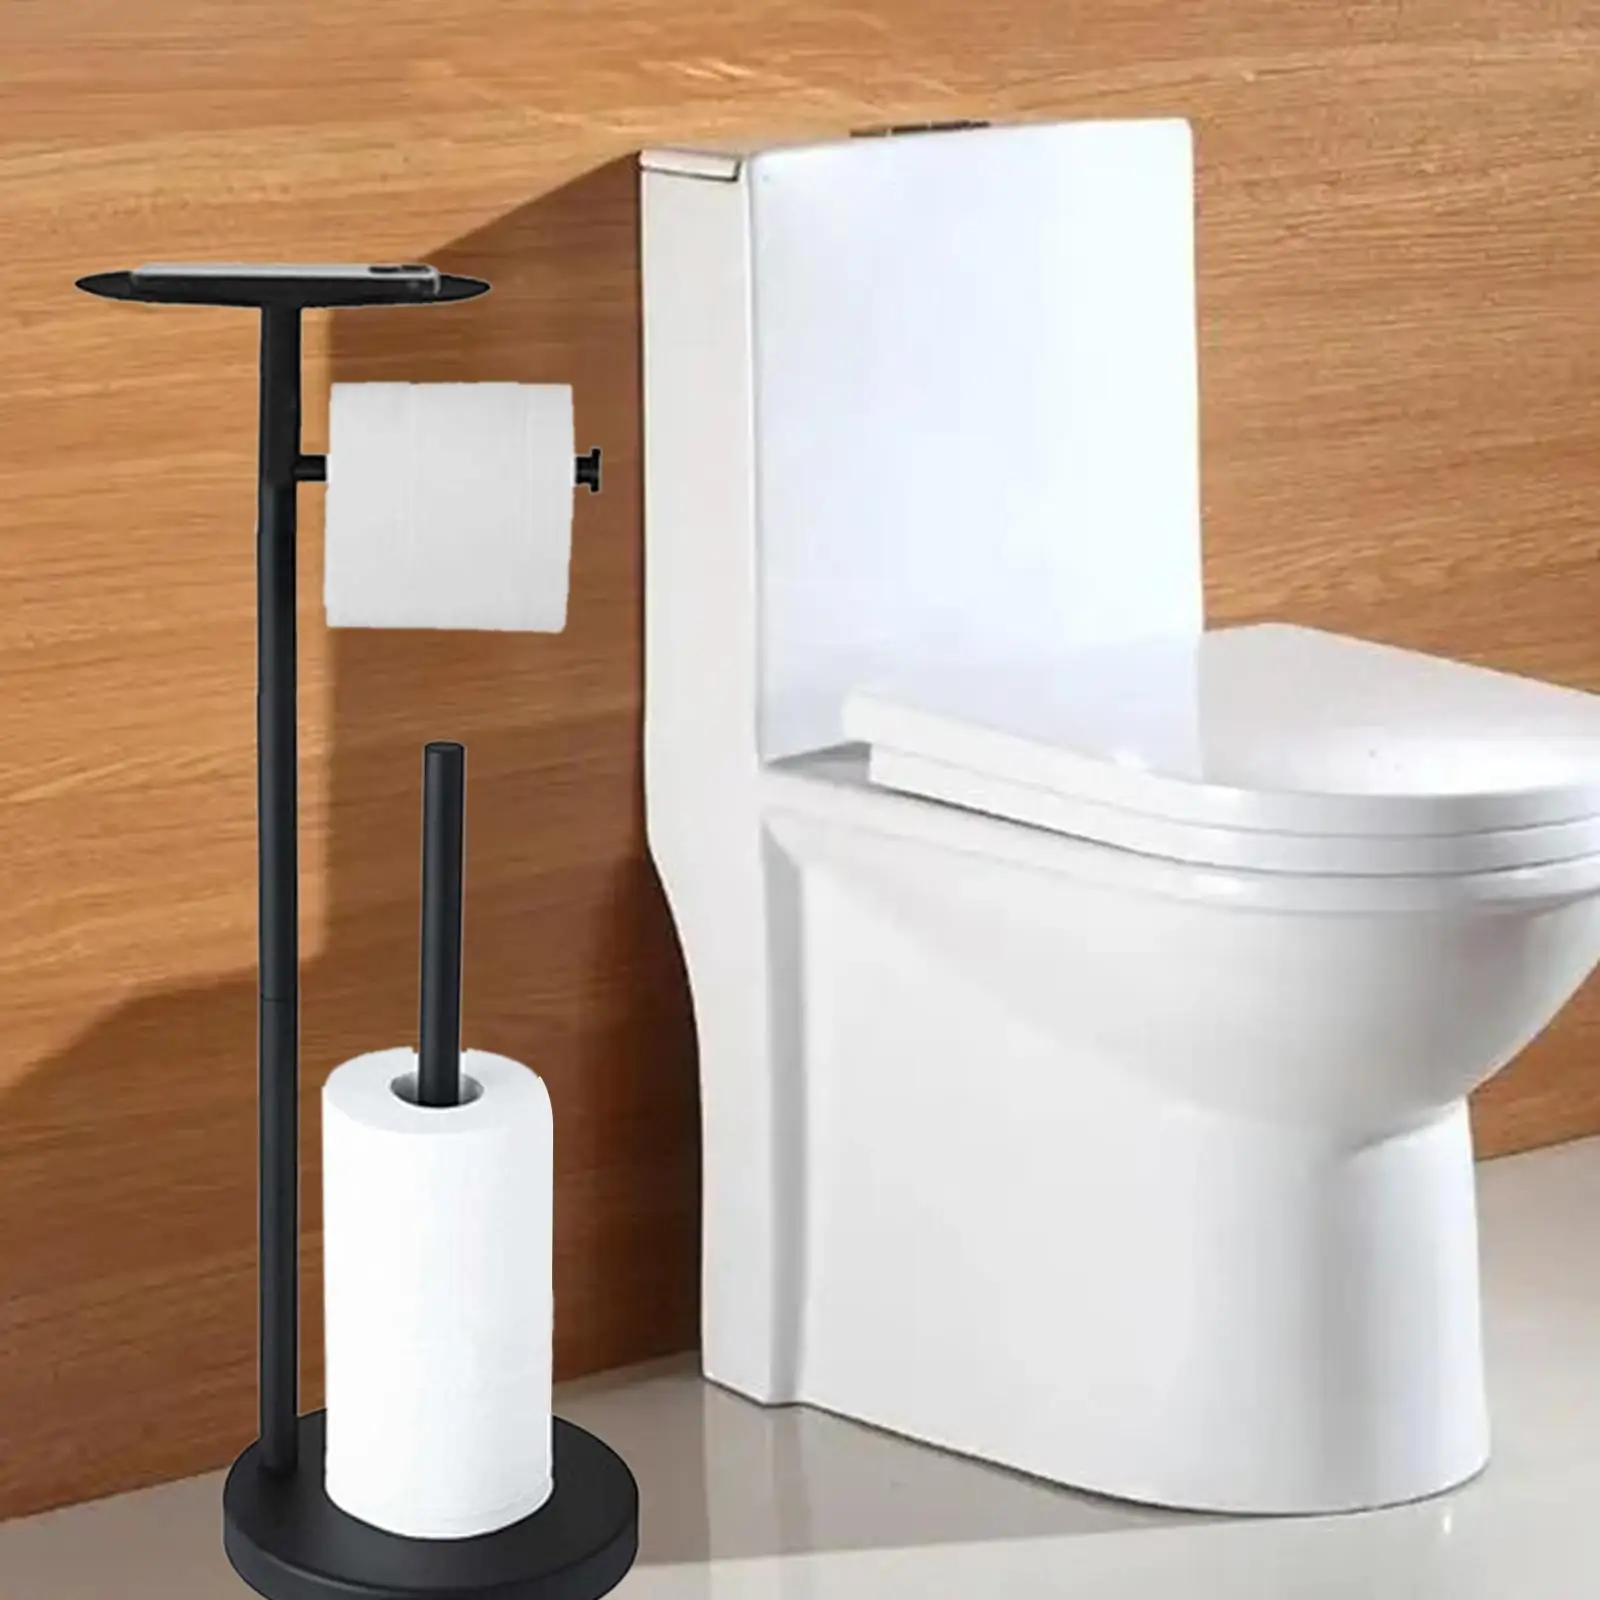 Free Standing Toilet Paper Tissue Dispenser with Top Storage Shelf Organization Floor Paper Towel Holder for Bathroom Farmhouse